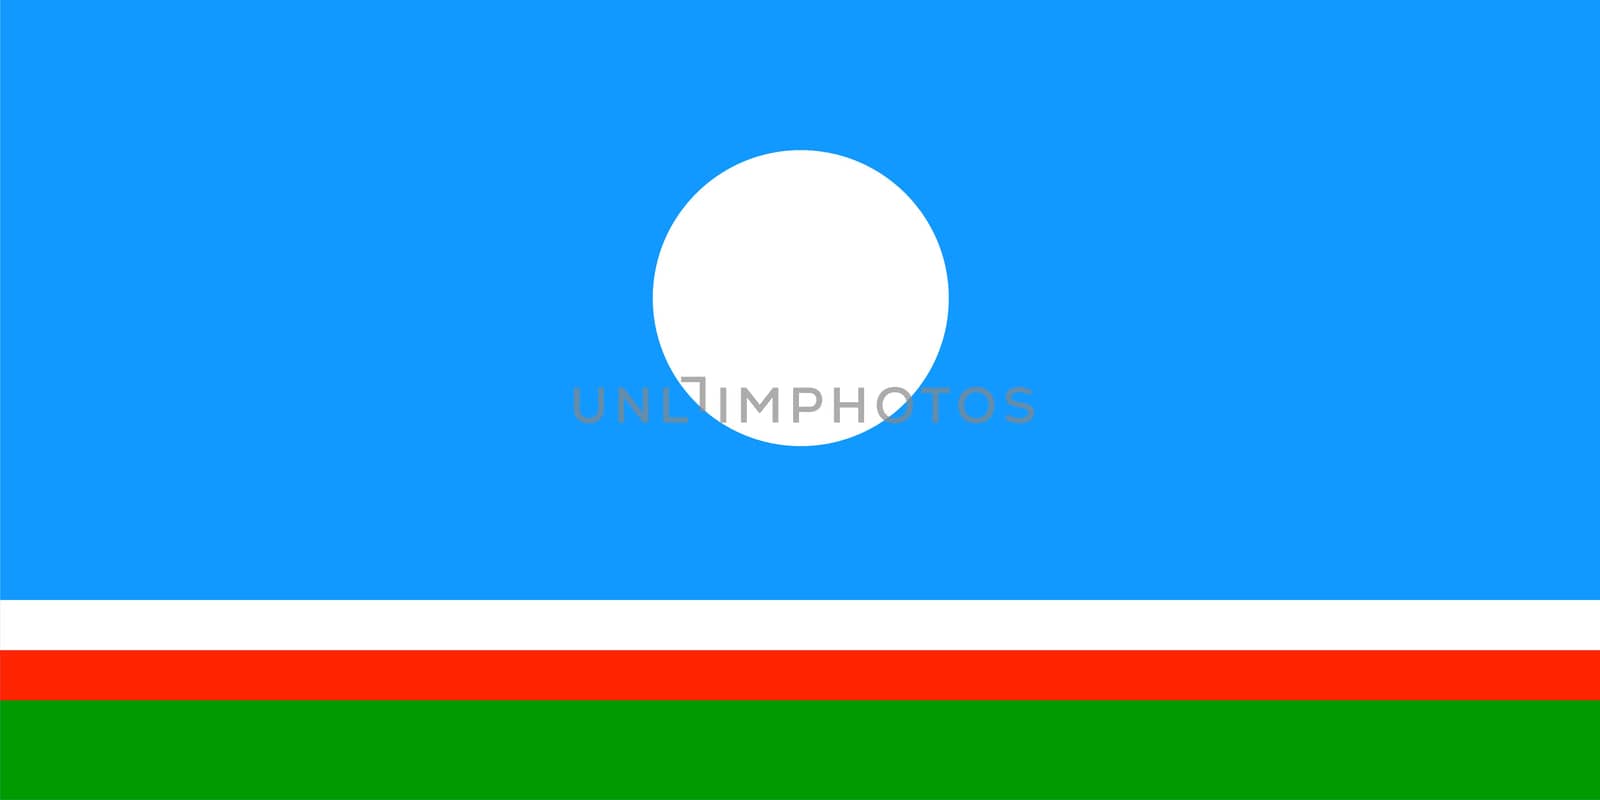 sakha republic flag or Yakutia region computer generated